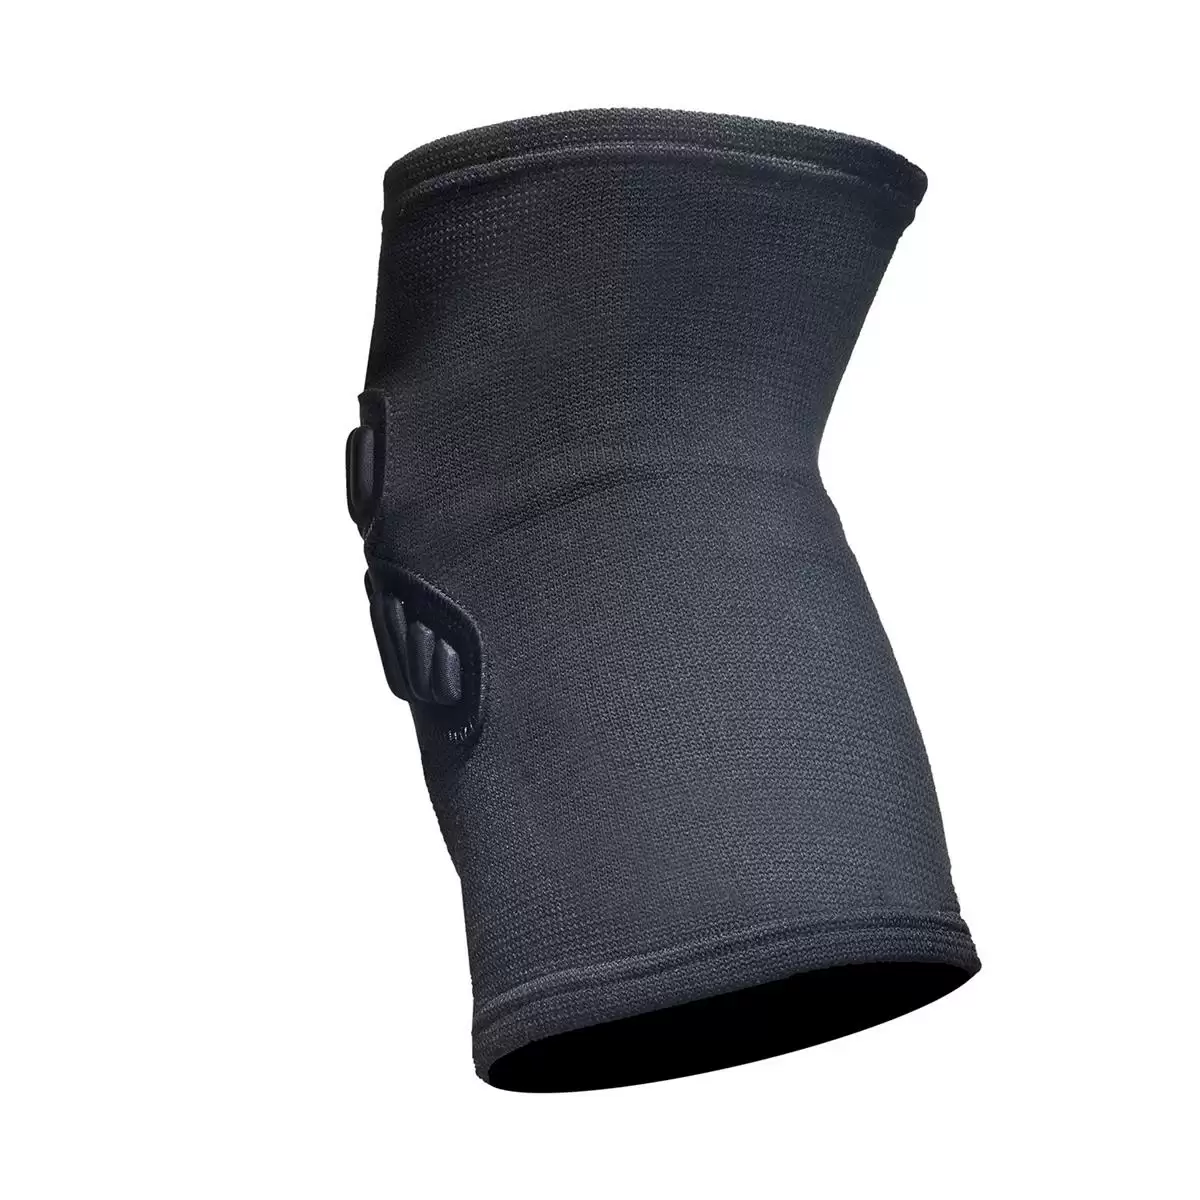 Sleeve 3D Knee guards Black Size M #1